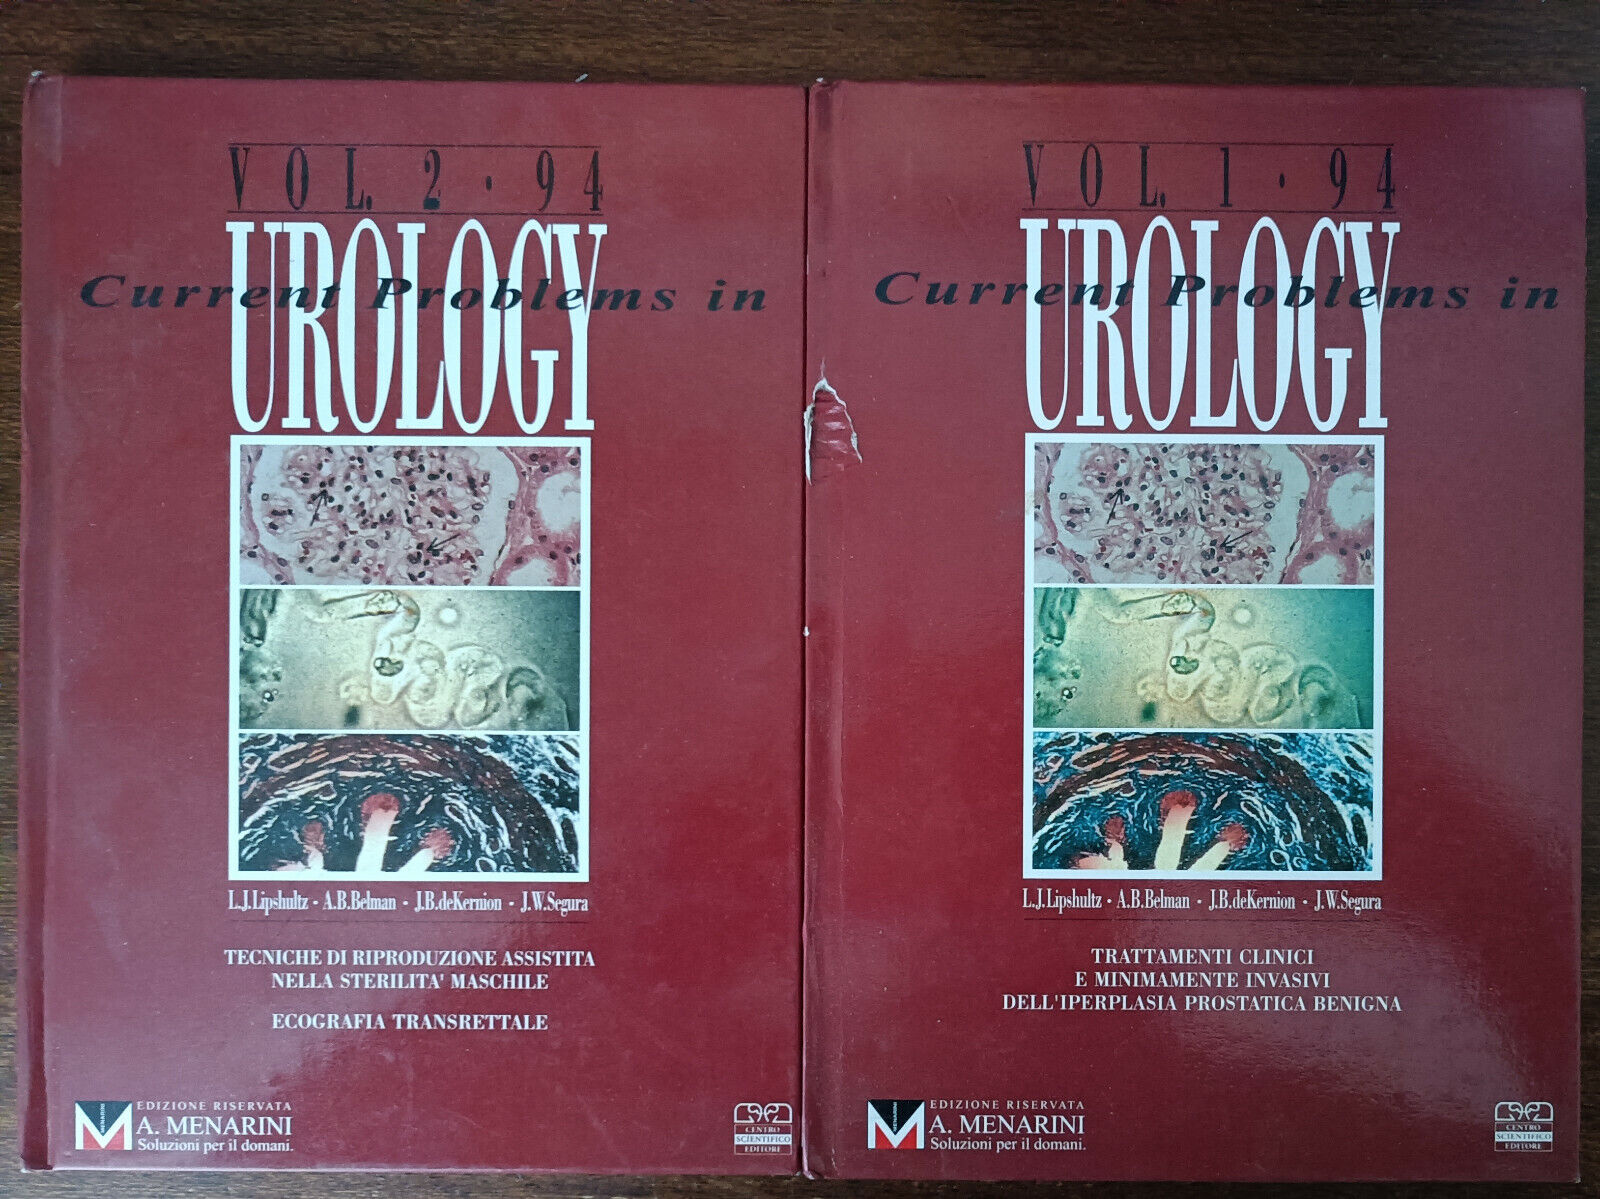 Current problems in urology. Vol. 1-2 - Centro scientifico editore, 1994 - A